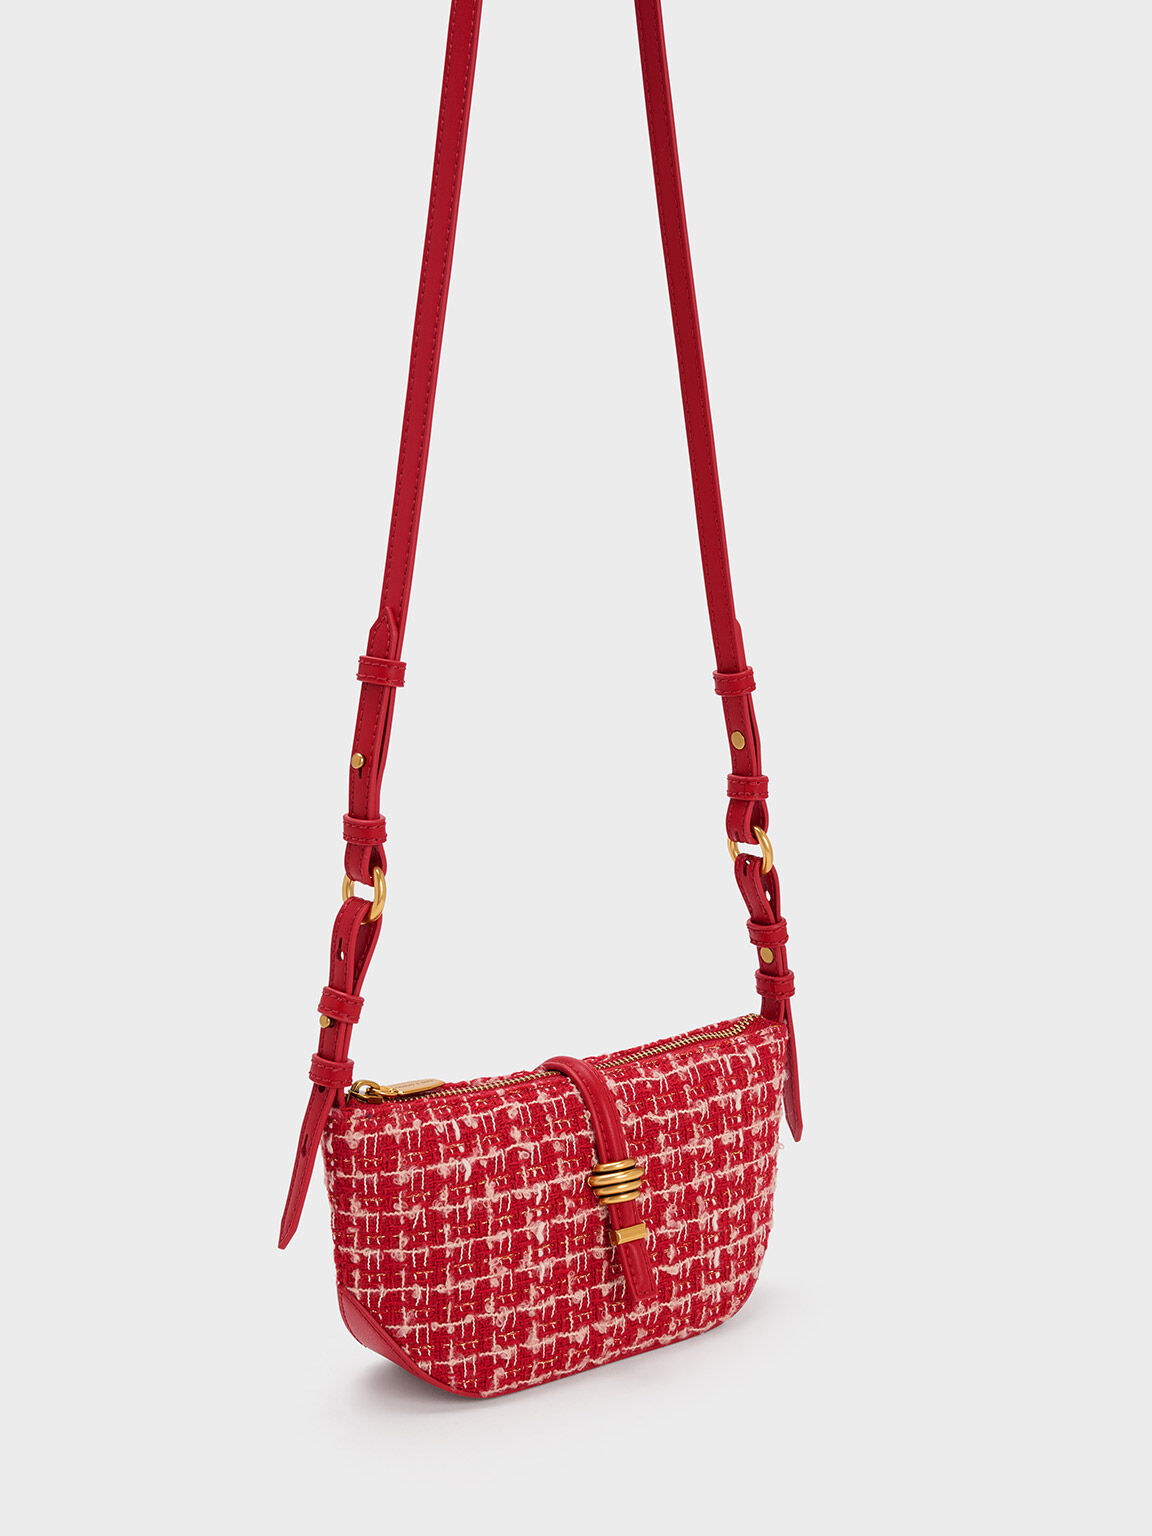 Trudy Tweed Belted Geometric Bag, Red, hi-res